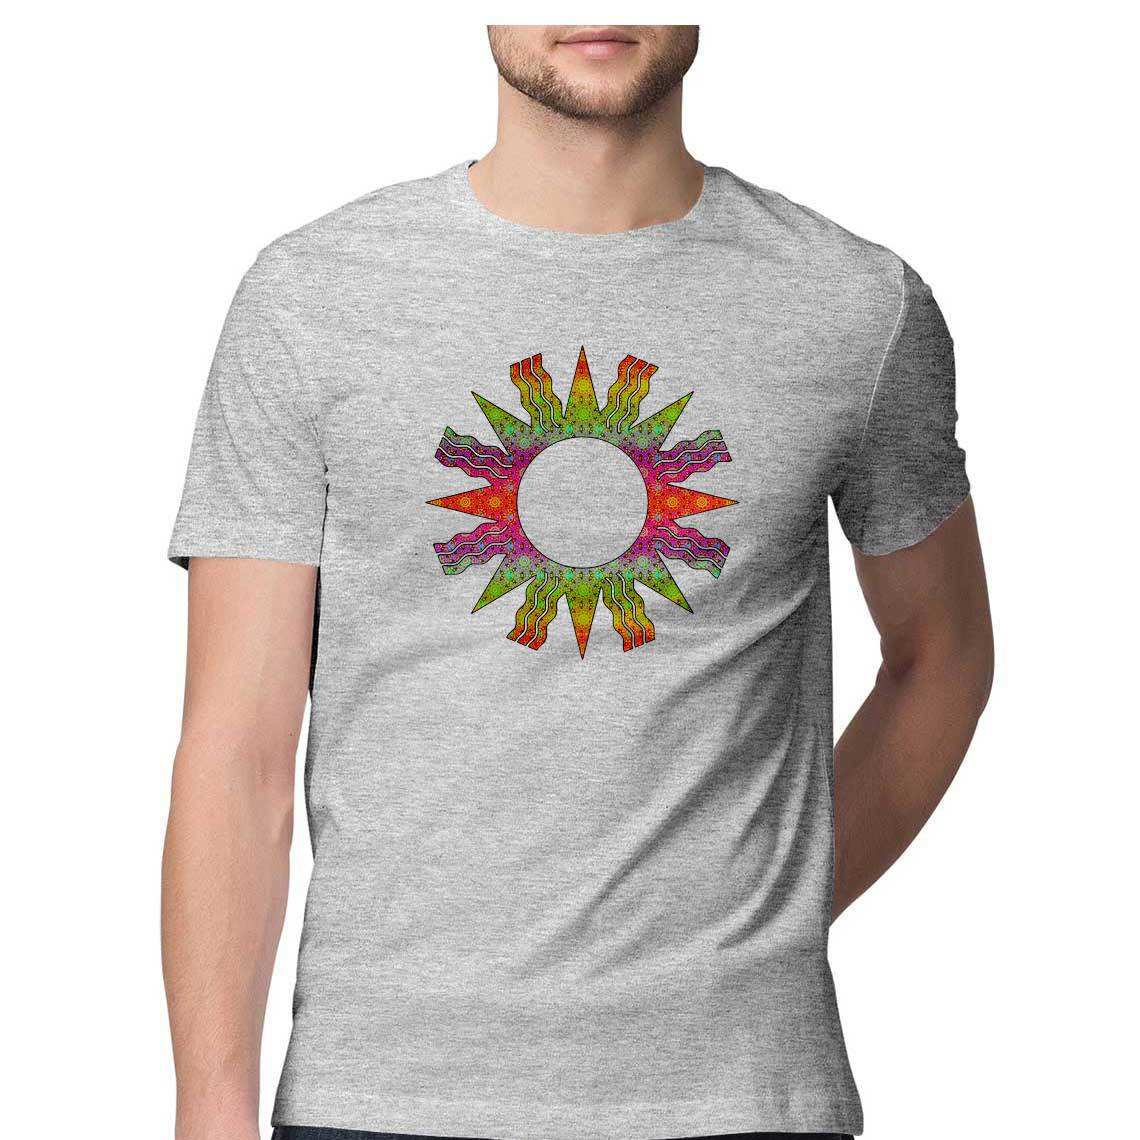 Star of Ishtar Men's Graphic T-Shirt - CBD Store India